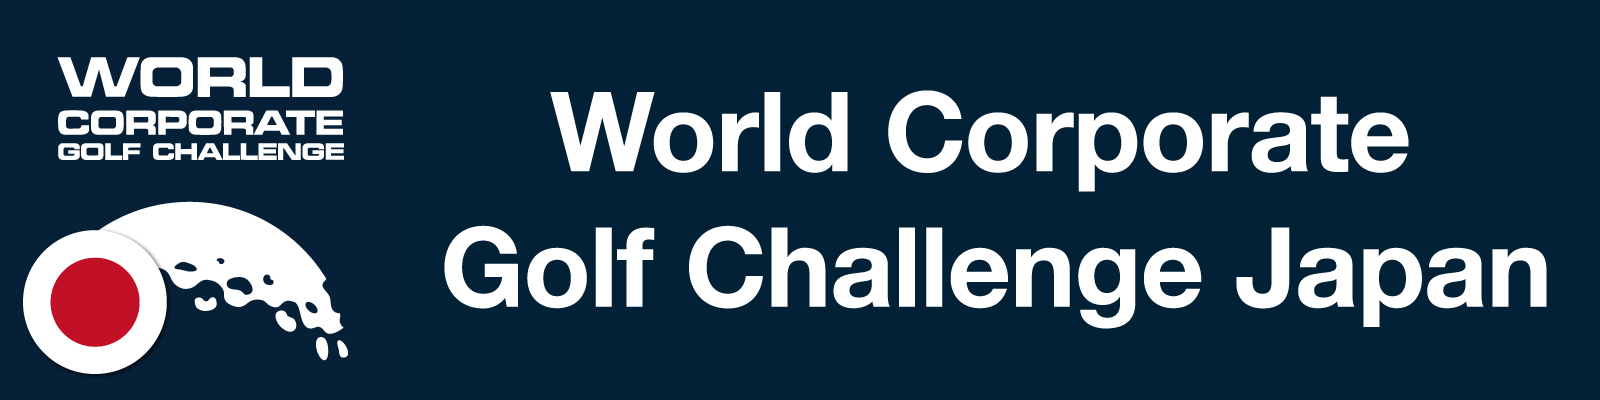 World Corporate Golf Challenge Japan